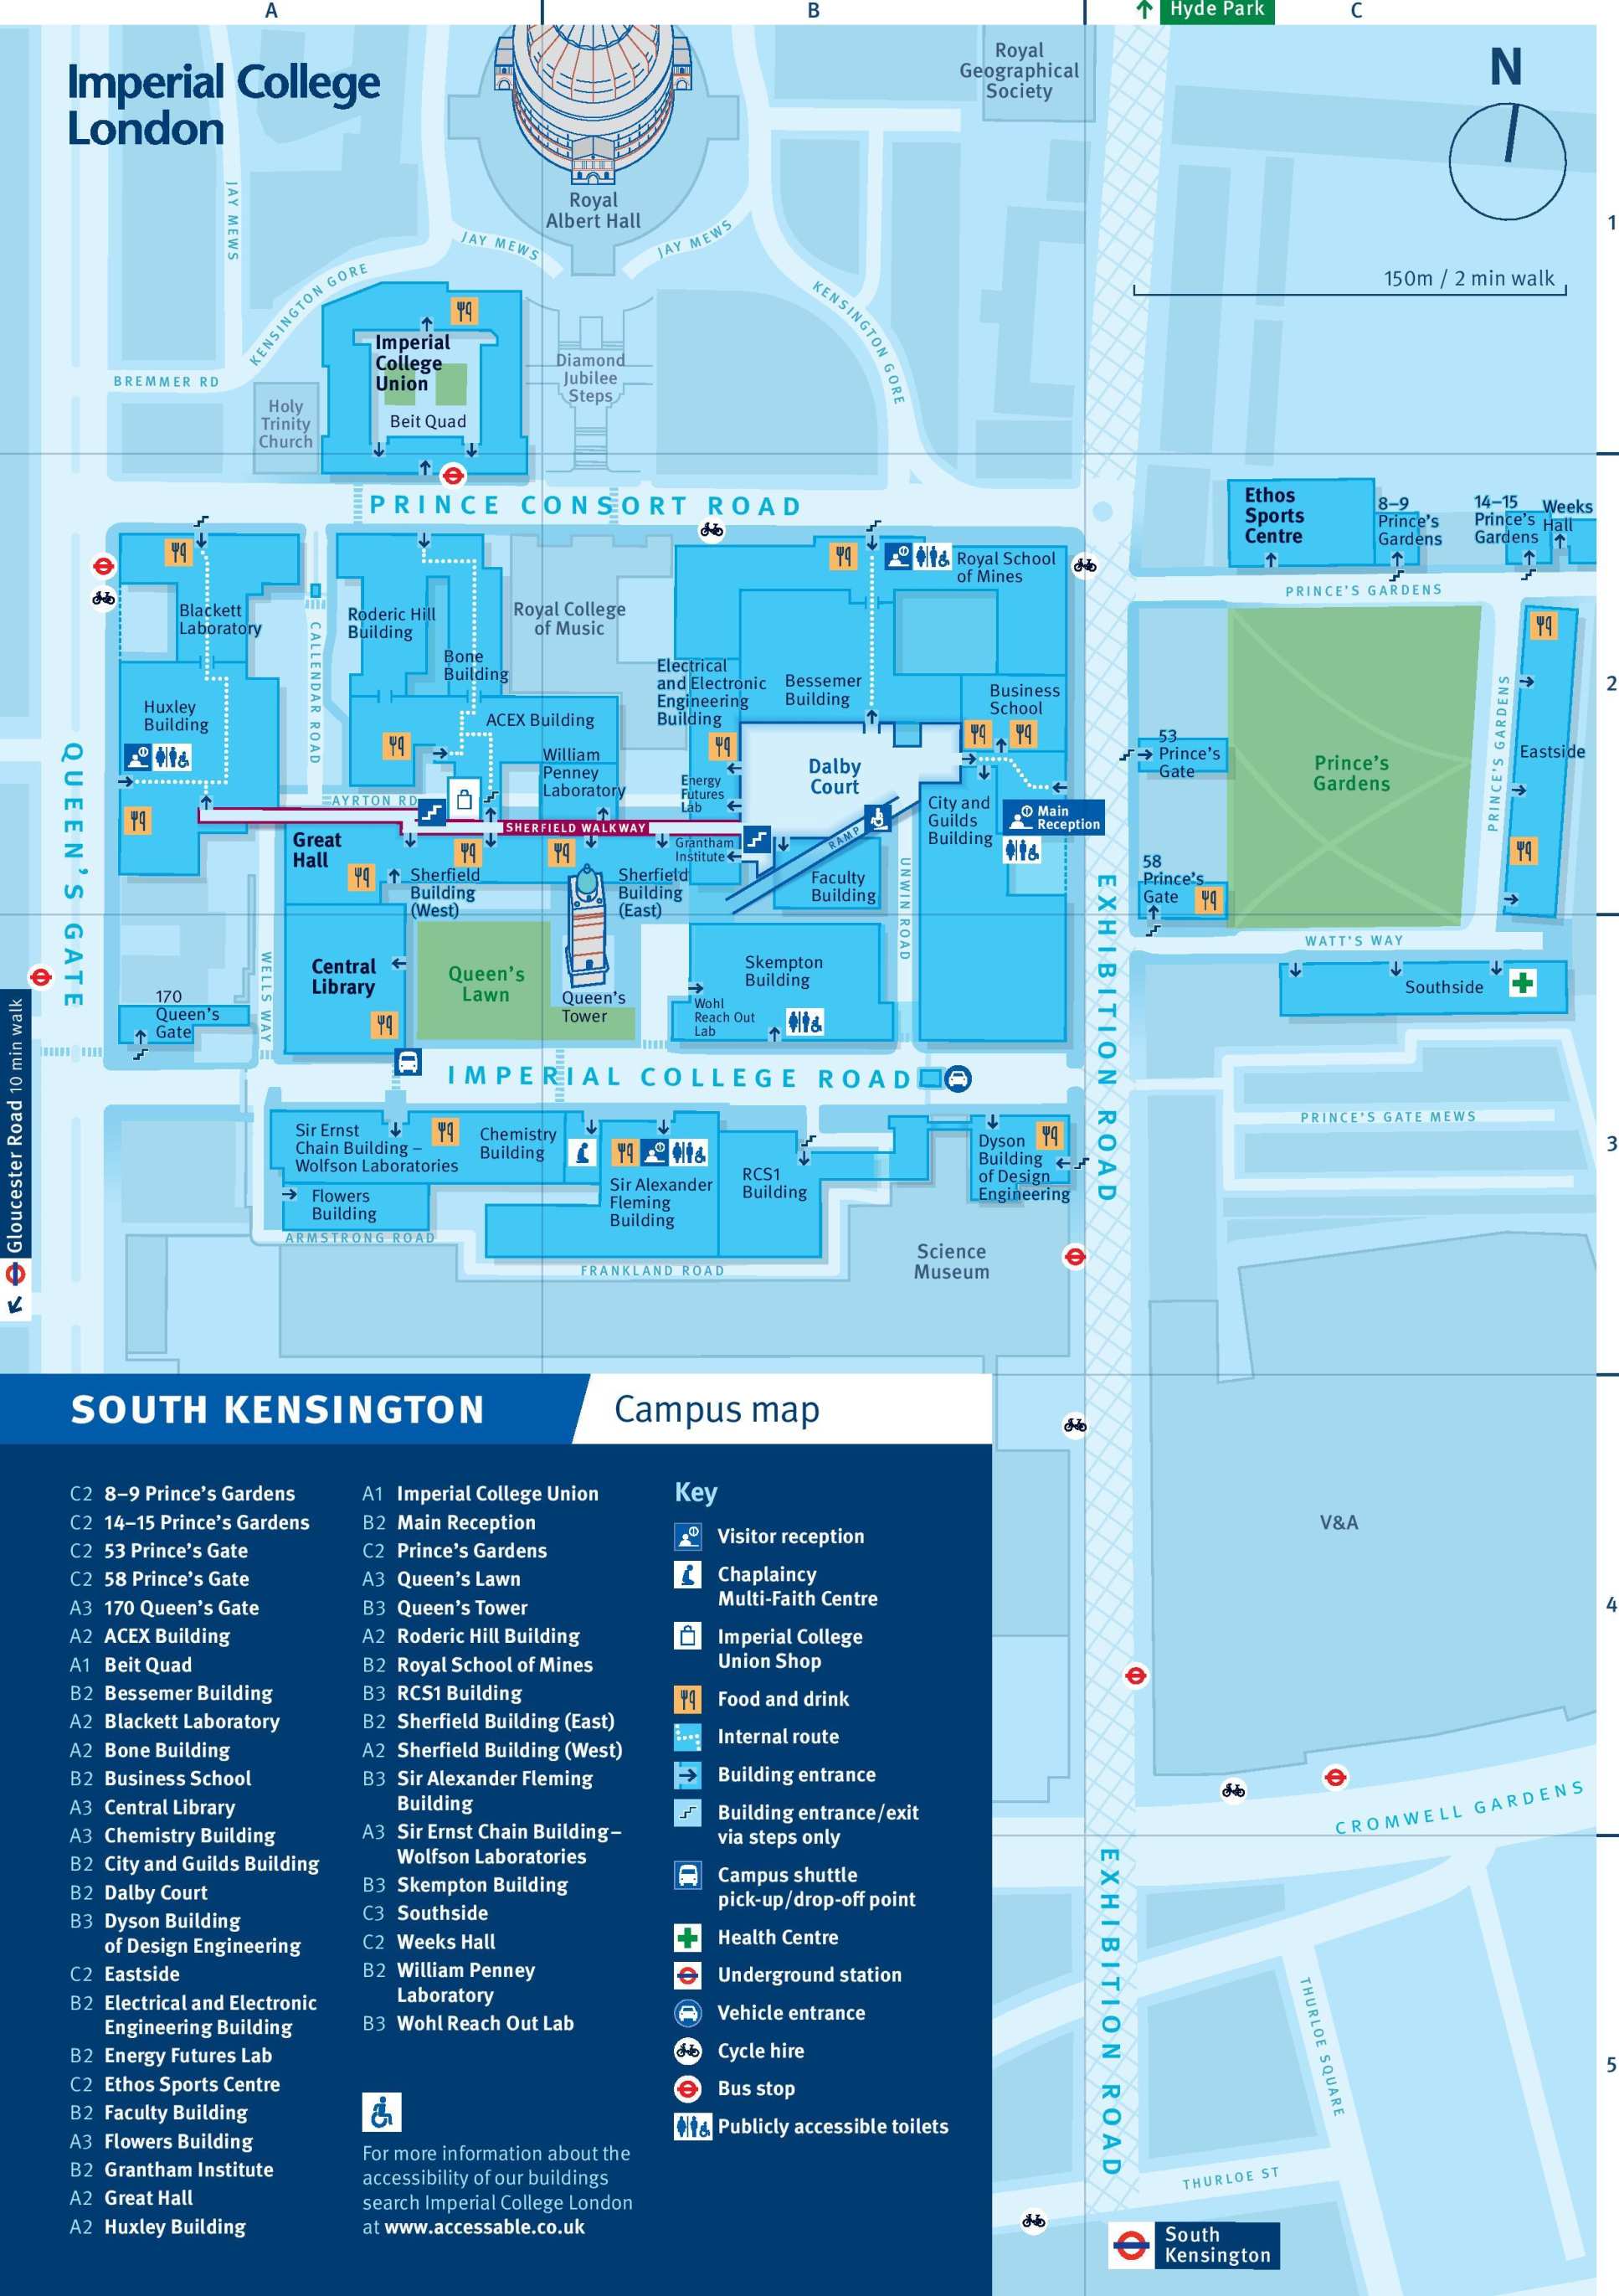 A map of South Kensington Campus